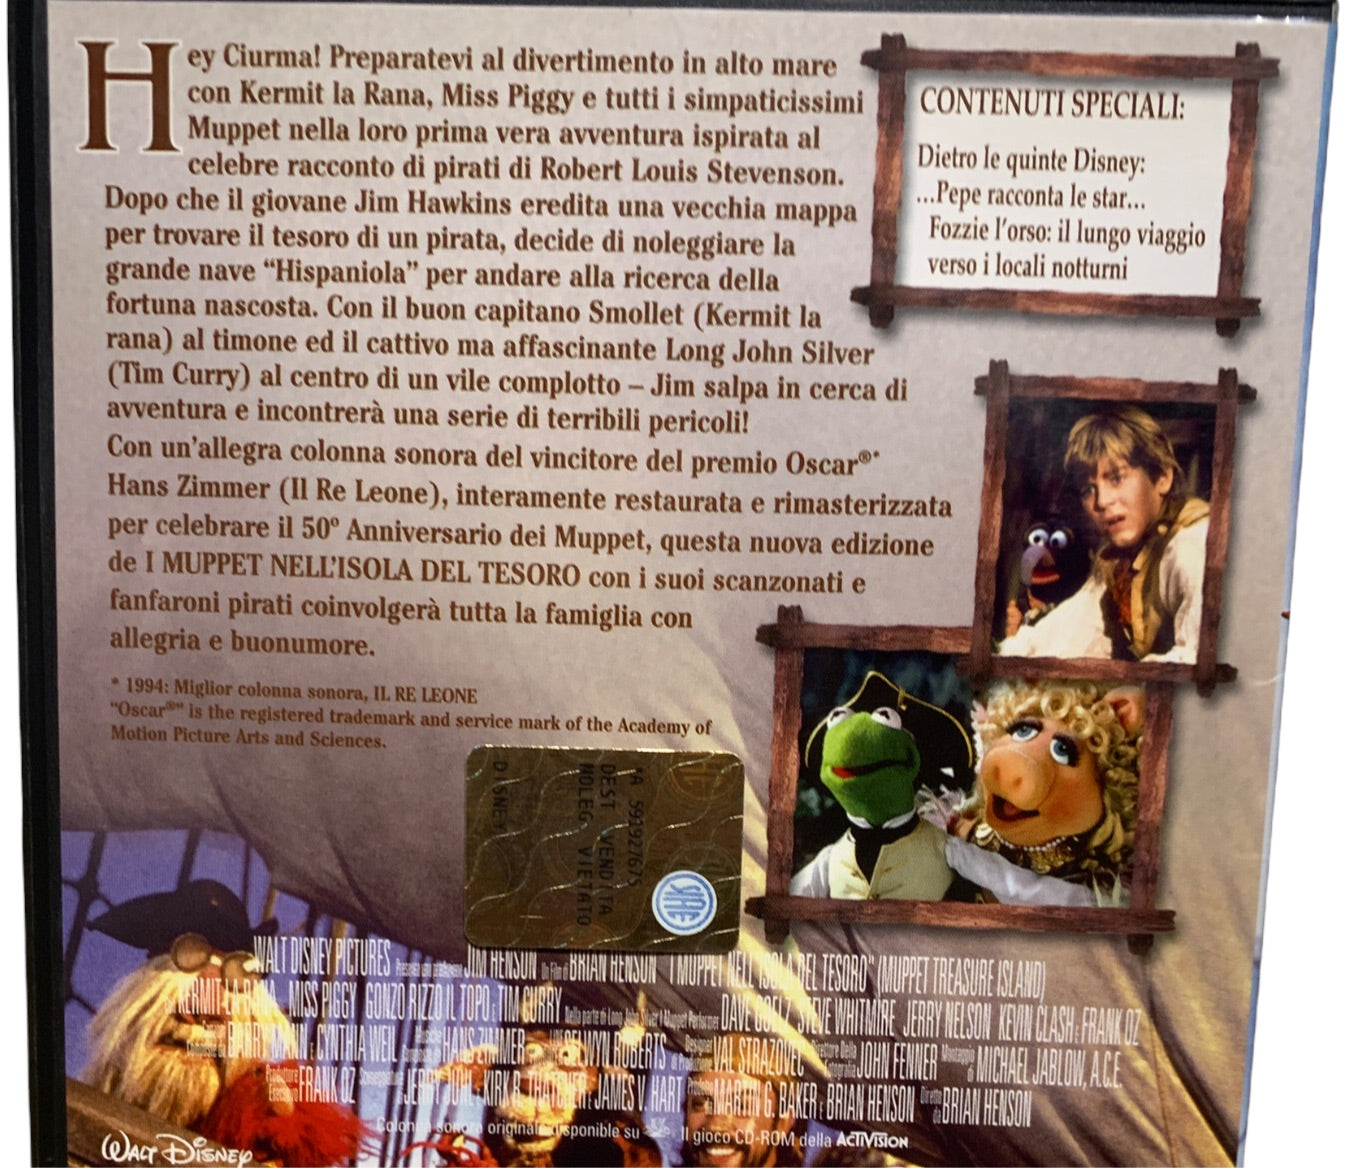 Muppets Treasure Island DVD